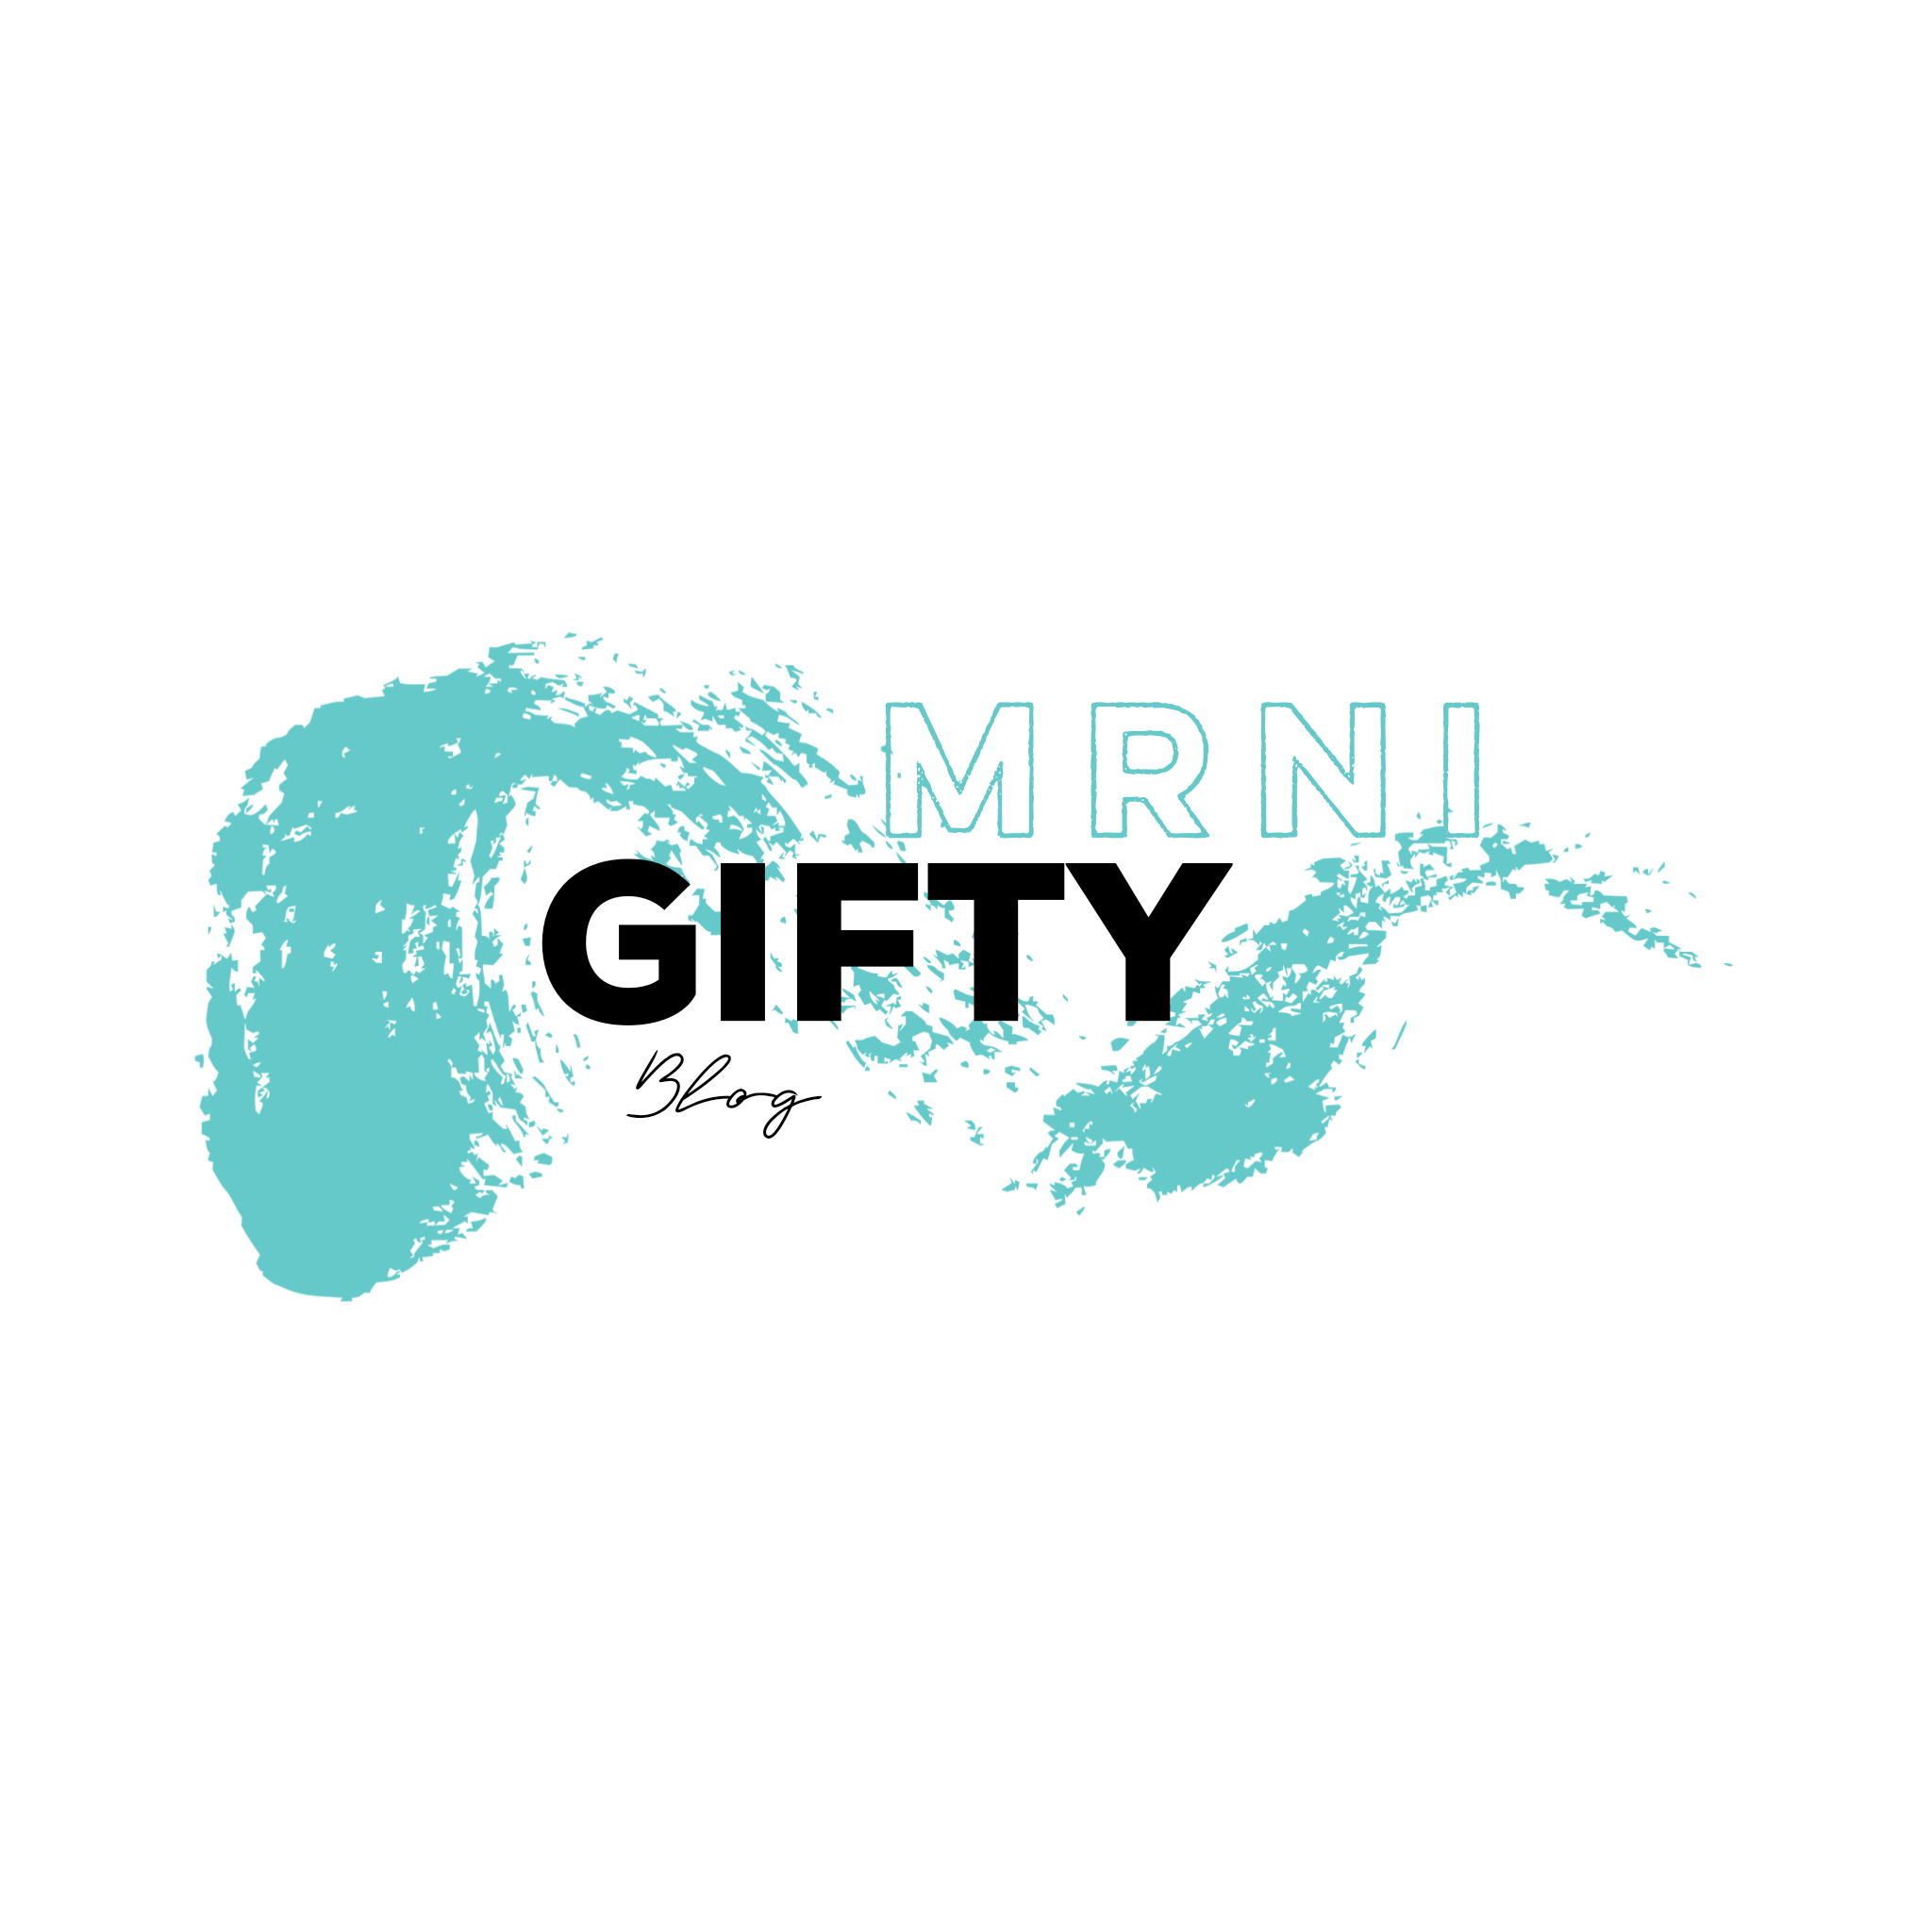 MRNI Gifty Blogs